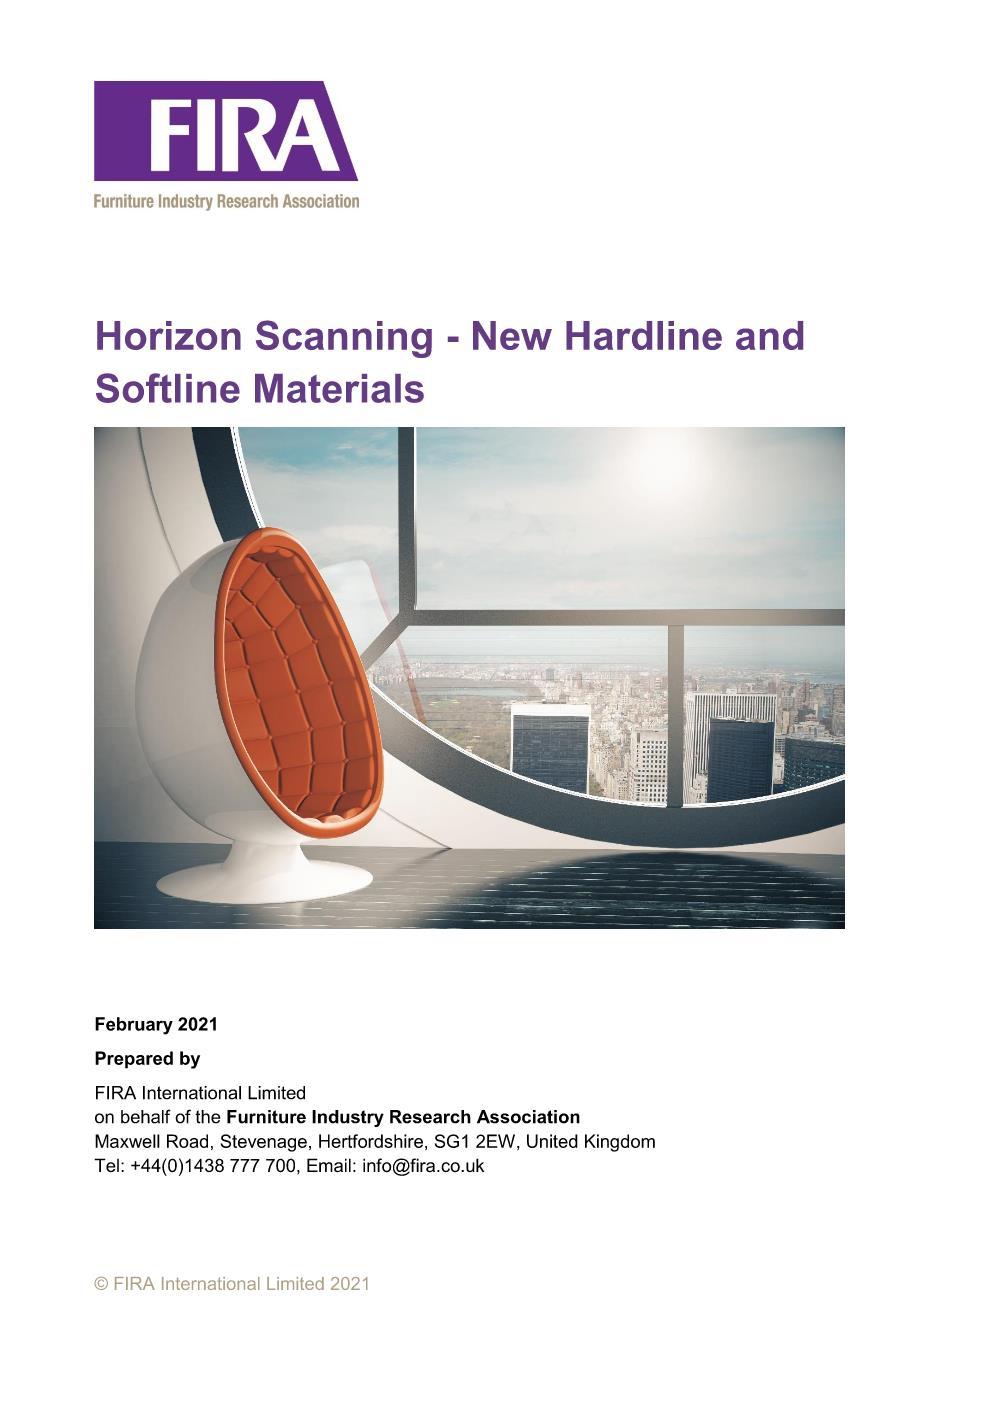 Horizon Scanning: Guide to New Hardline and Softline Materials